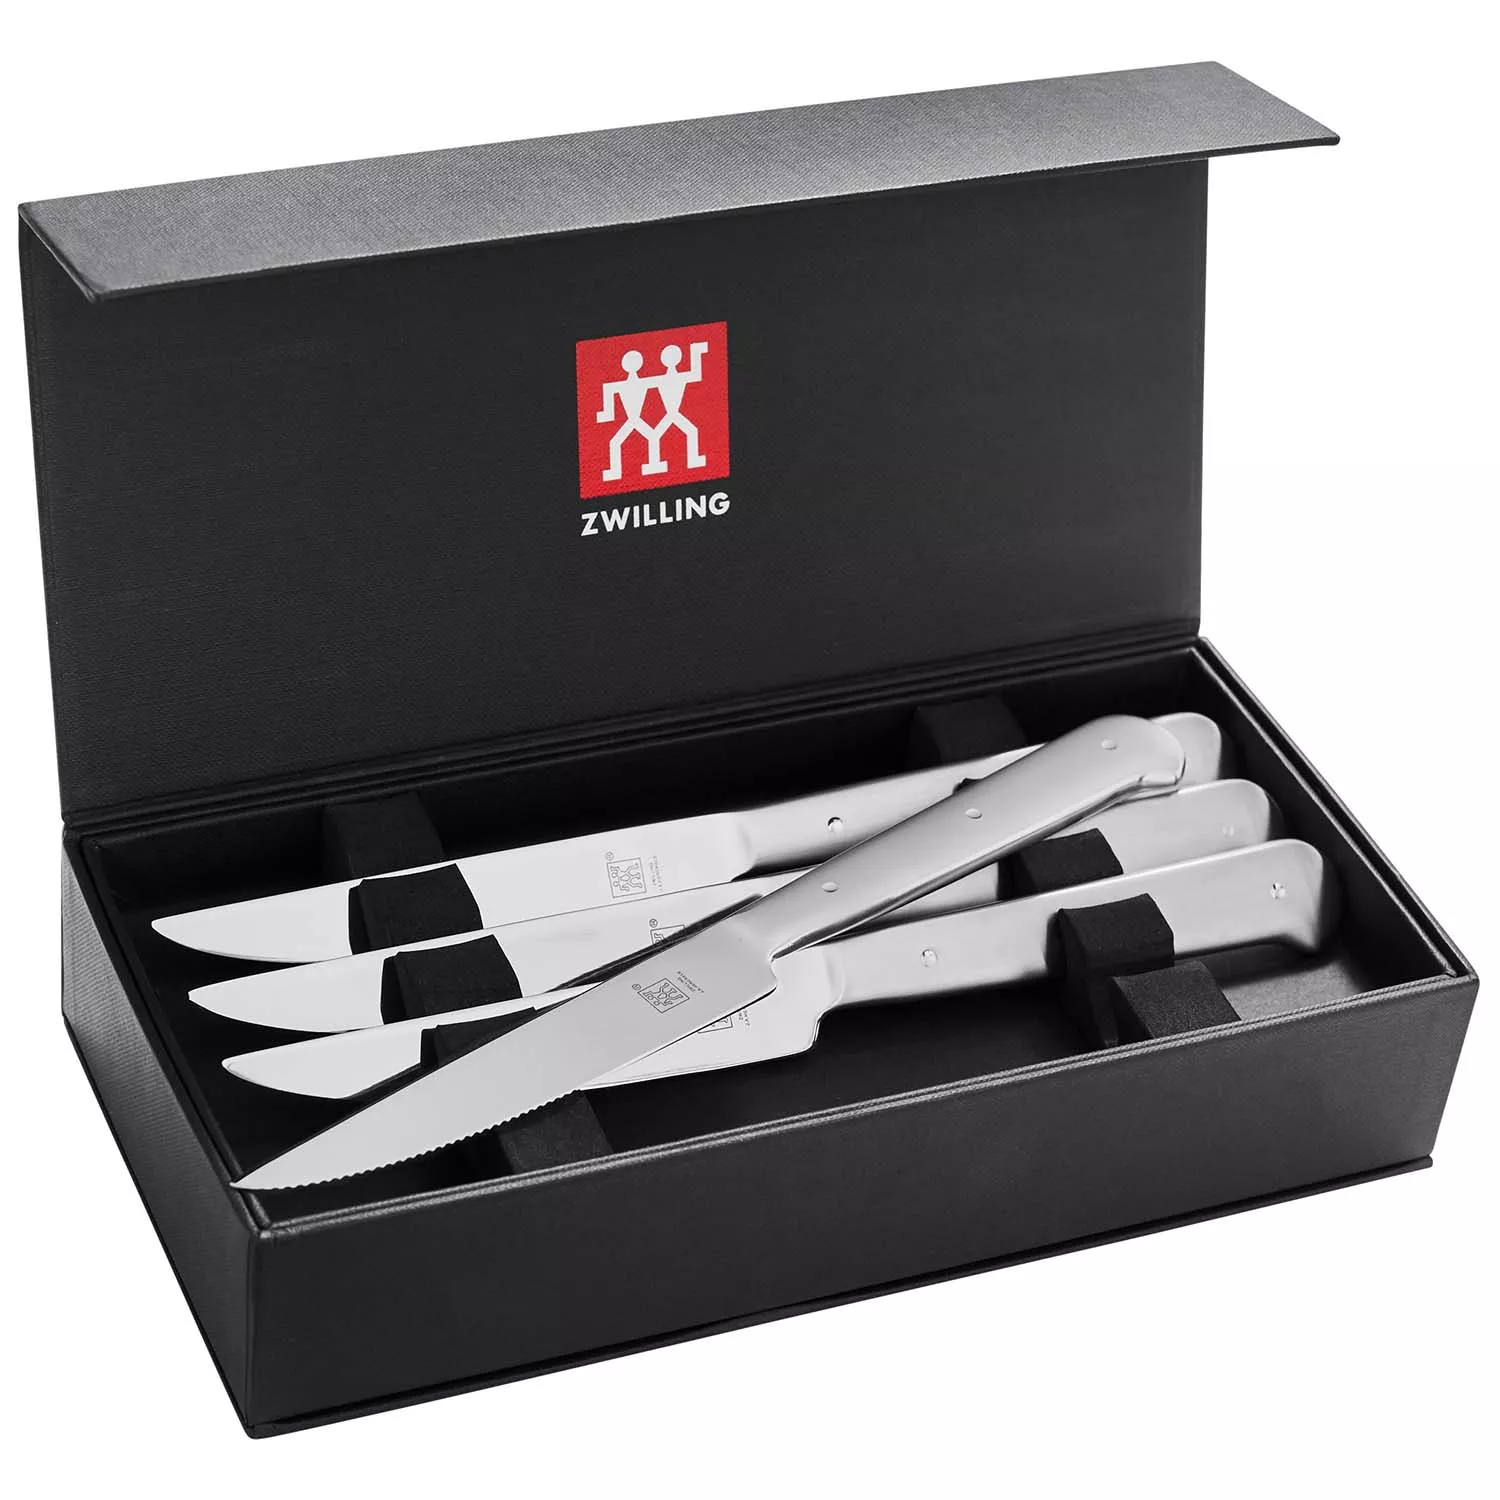 13 Pc Hobby Knife Set 2 Sets Free Shipping